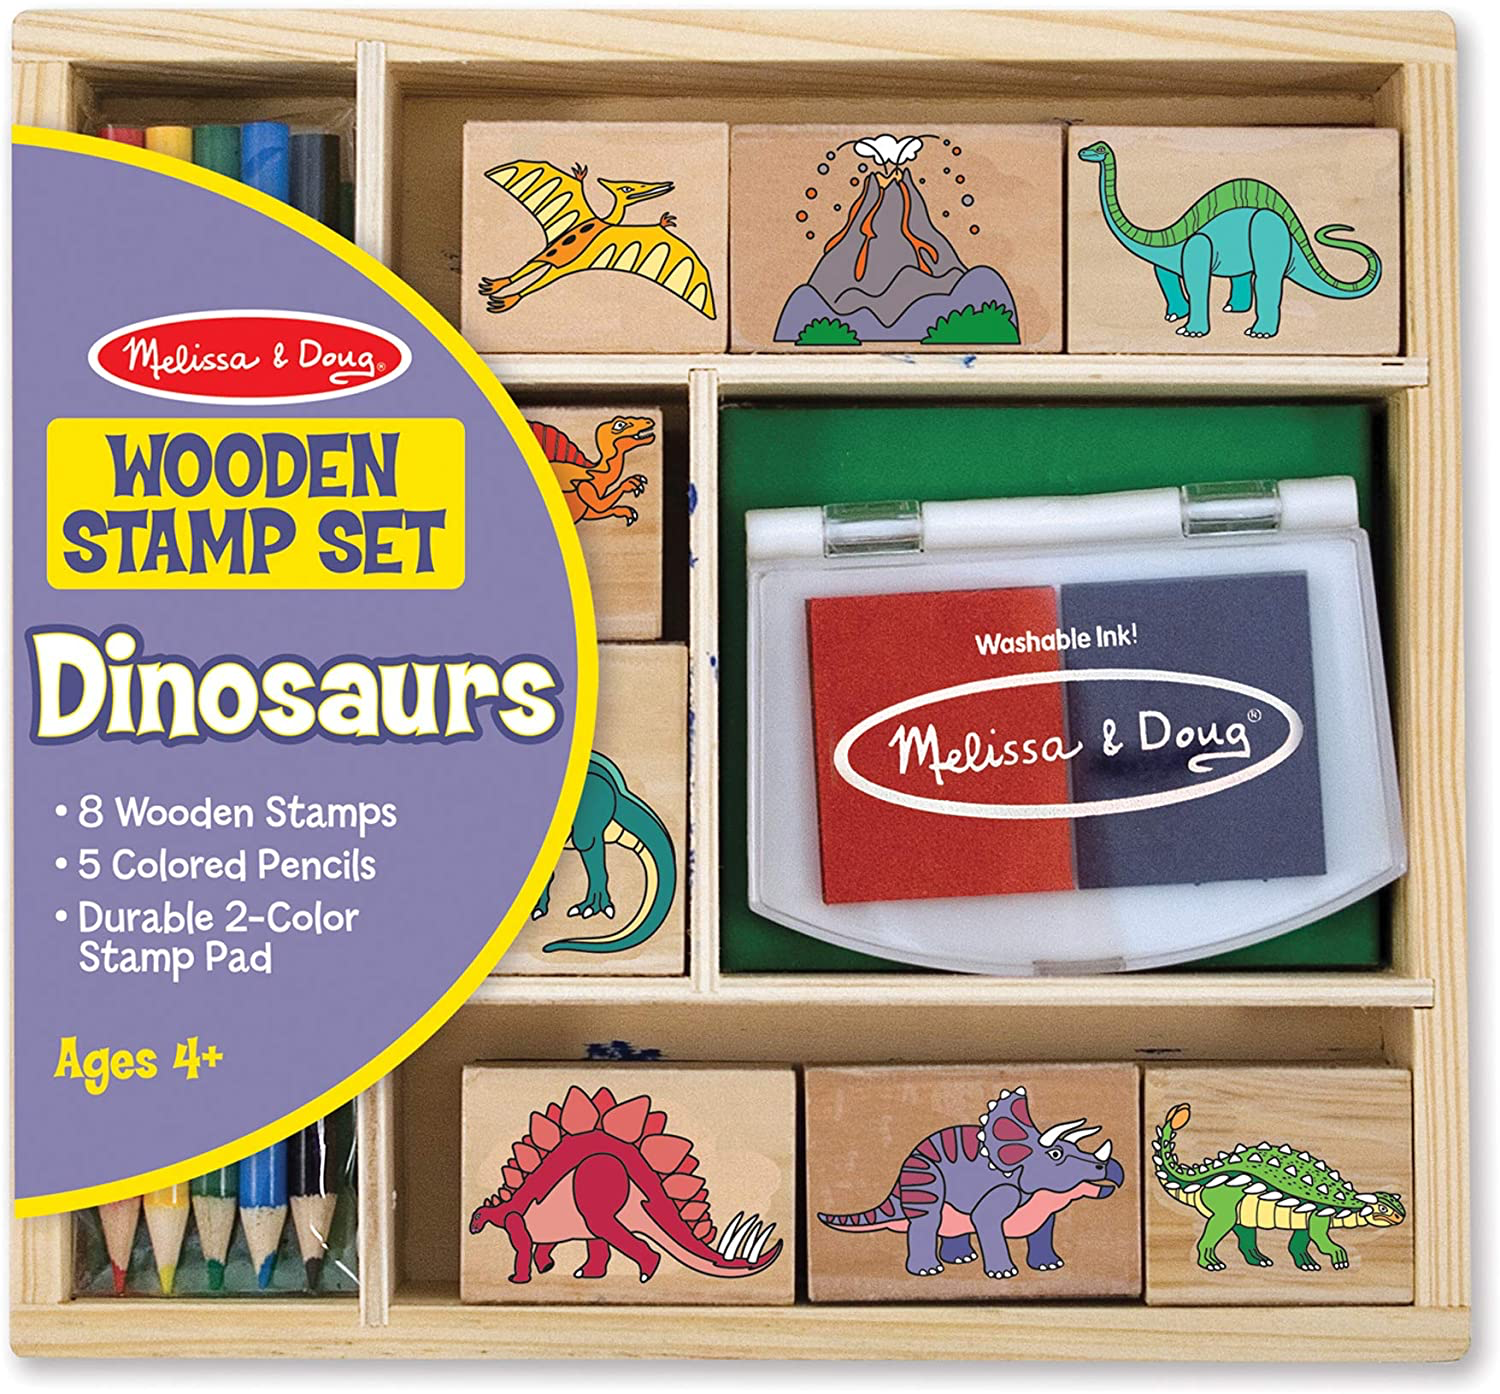 Melissa& Doug Wooden Stamp Set- Dinosaurs